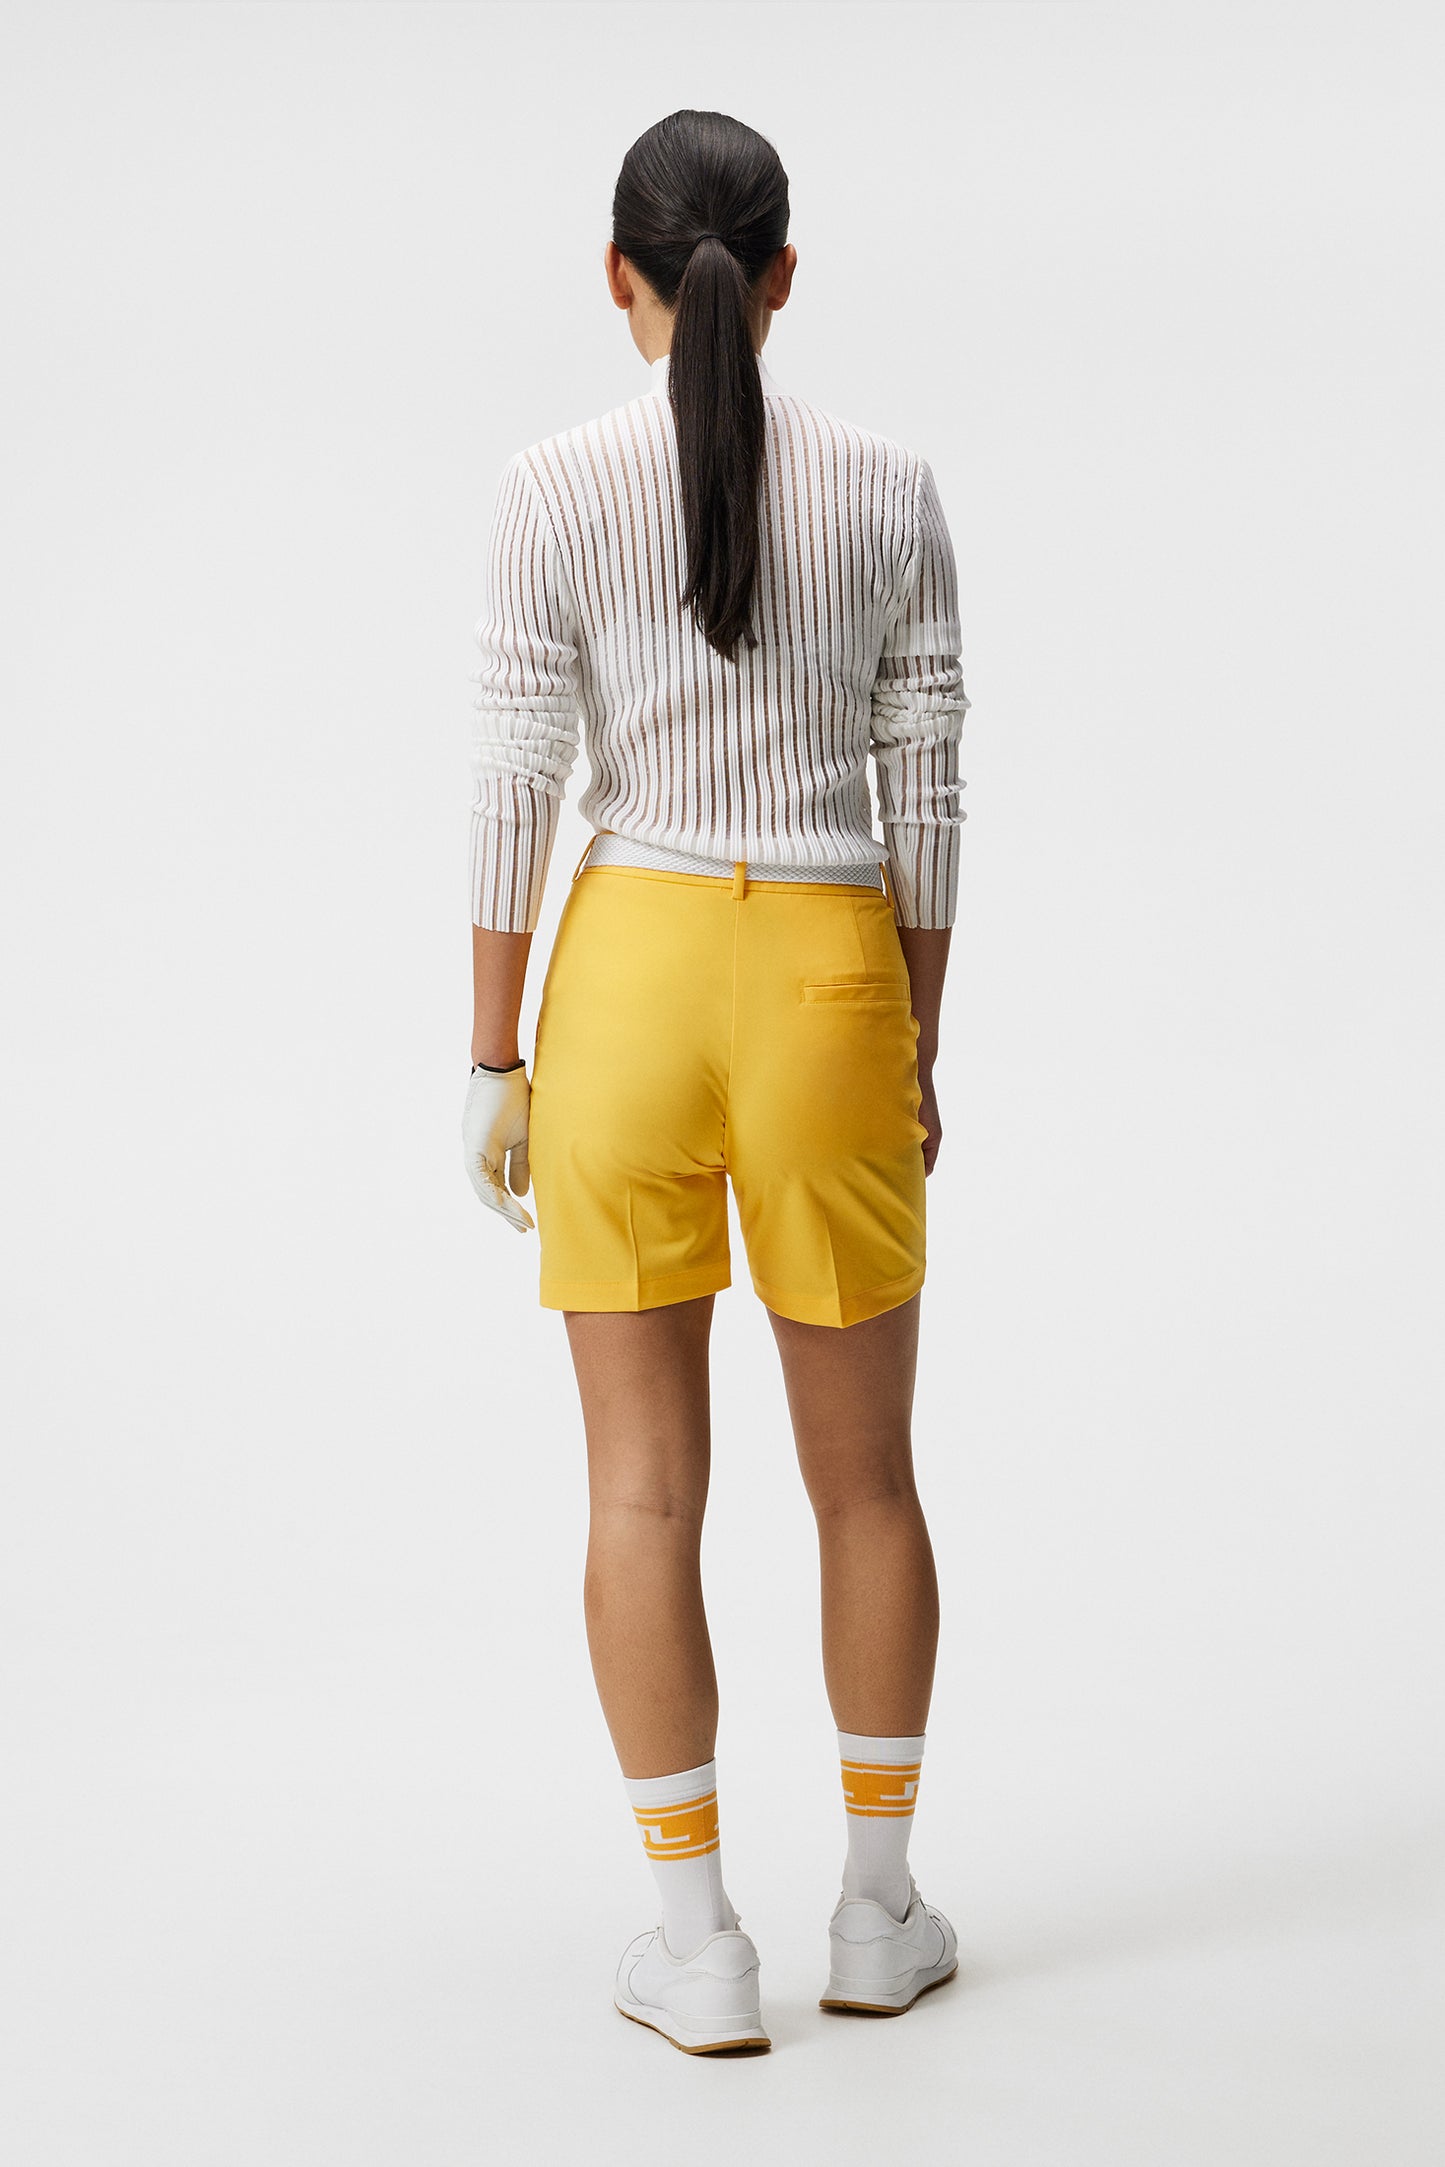 Gwen Long Shorts / Citrus